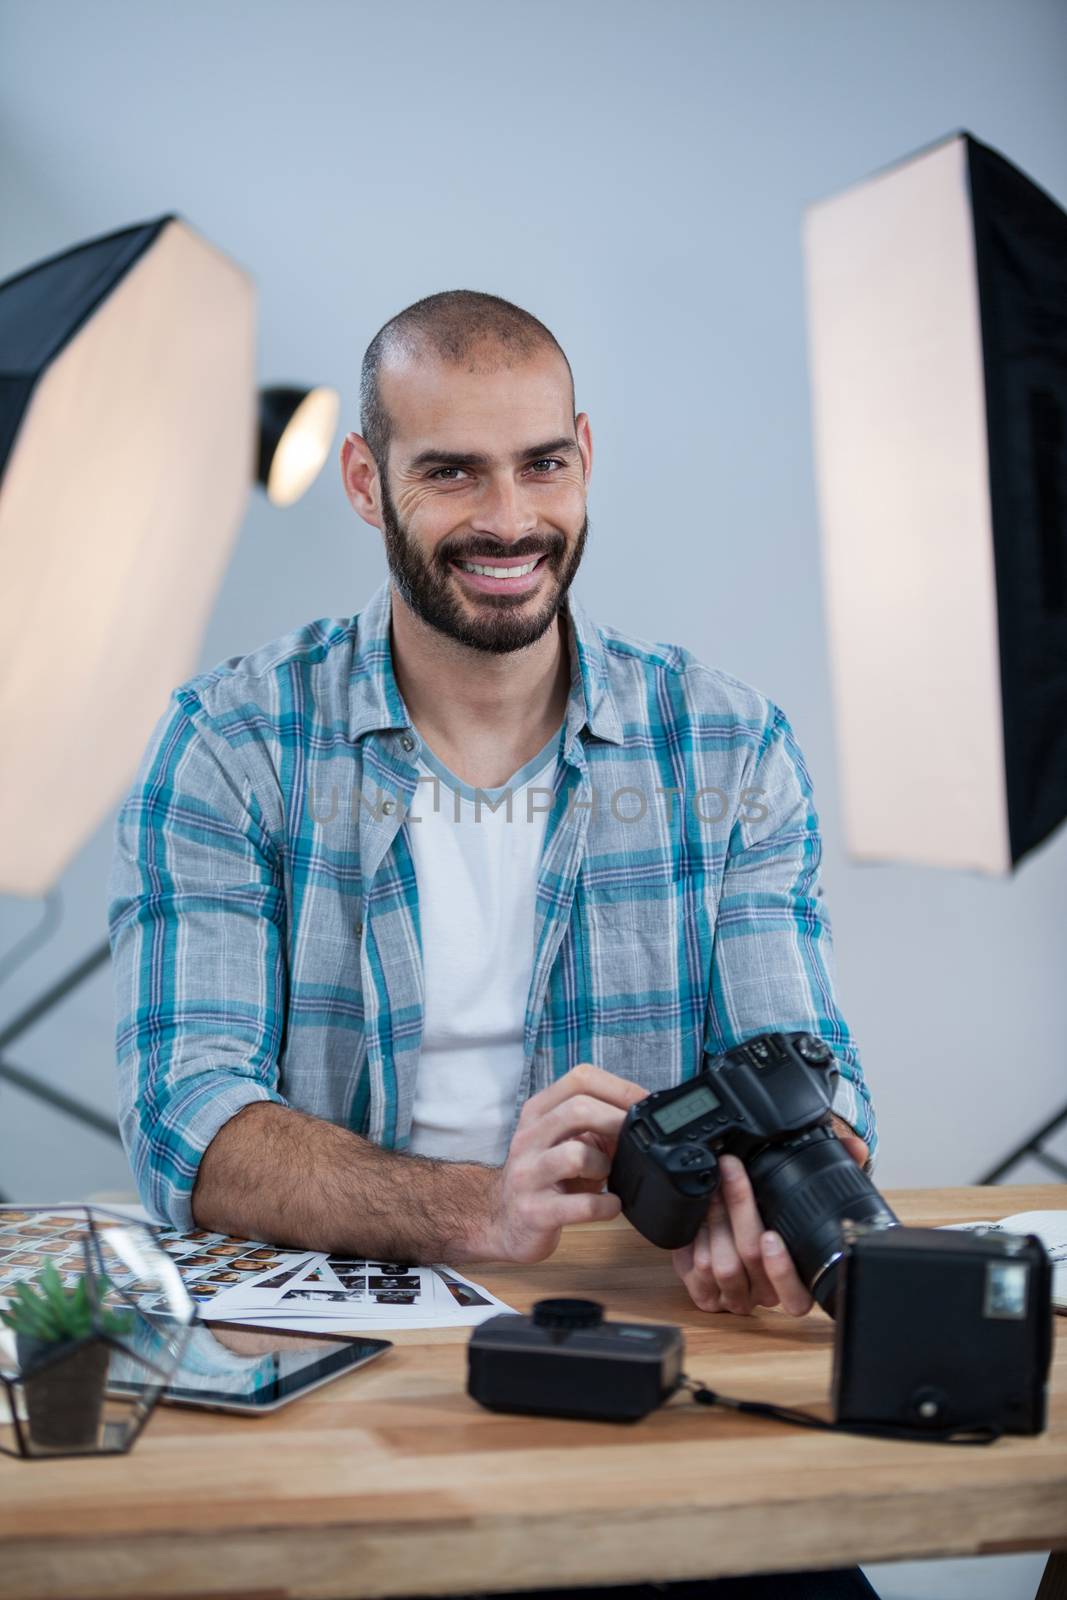 Portrait of photographer working over digital tablet at desk in studio